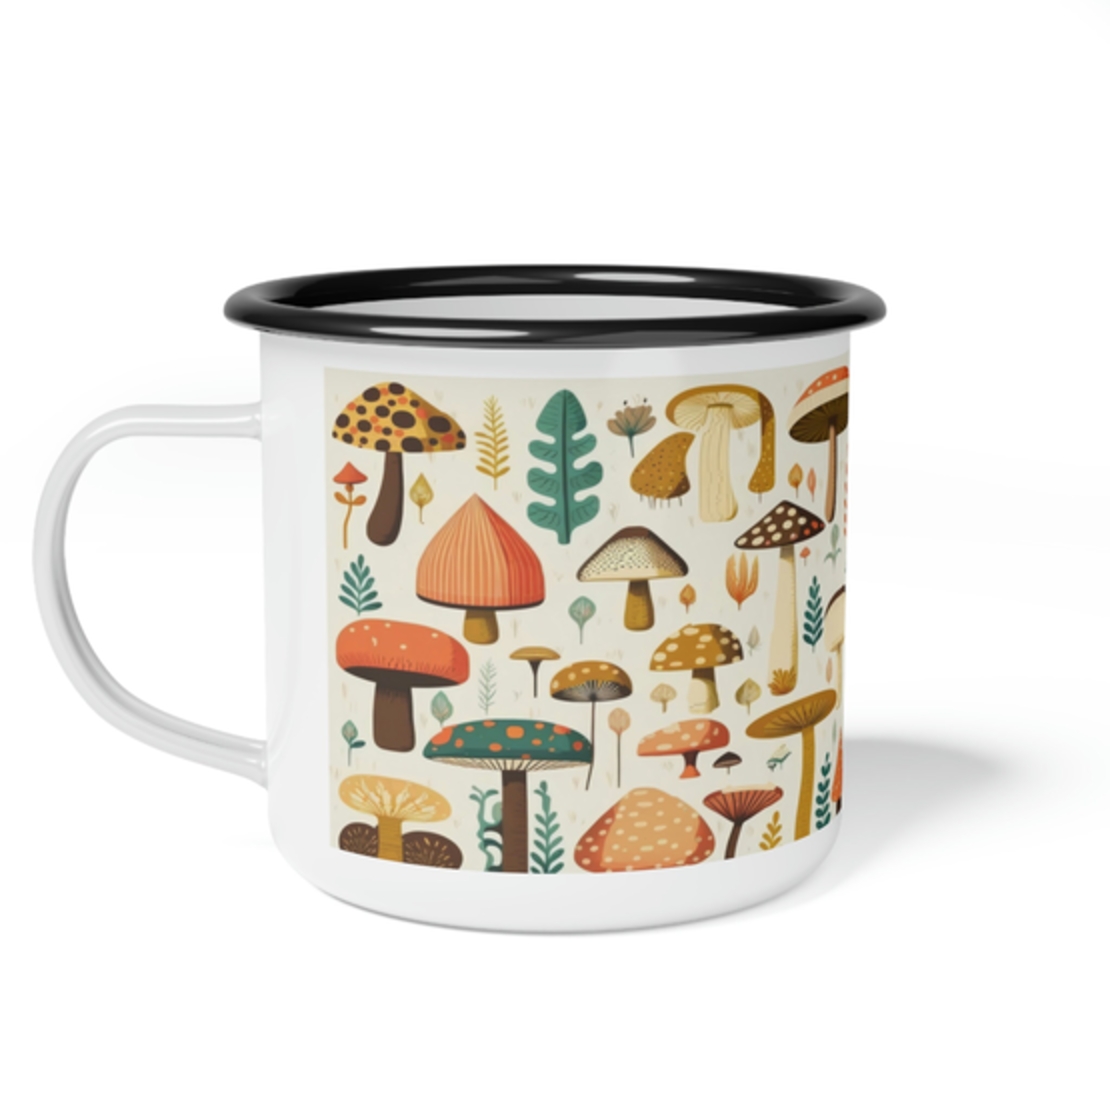 Nature's Brew Enamel Camping Mug - Rustic, Durable Mug for Outdoor Adventures - FungiFly